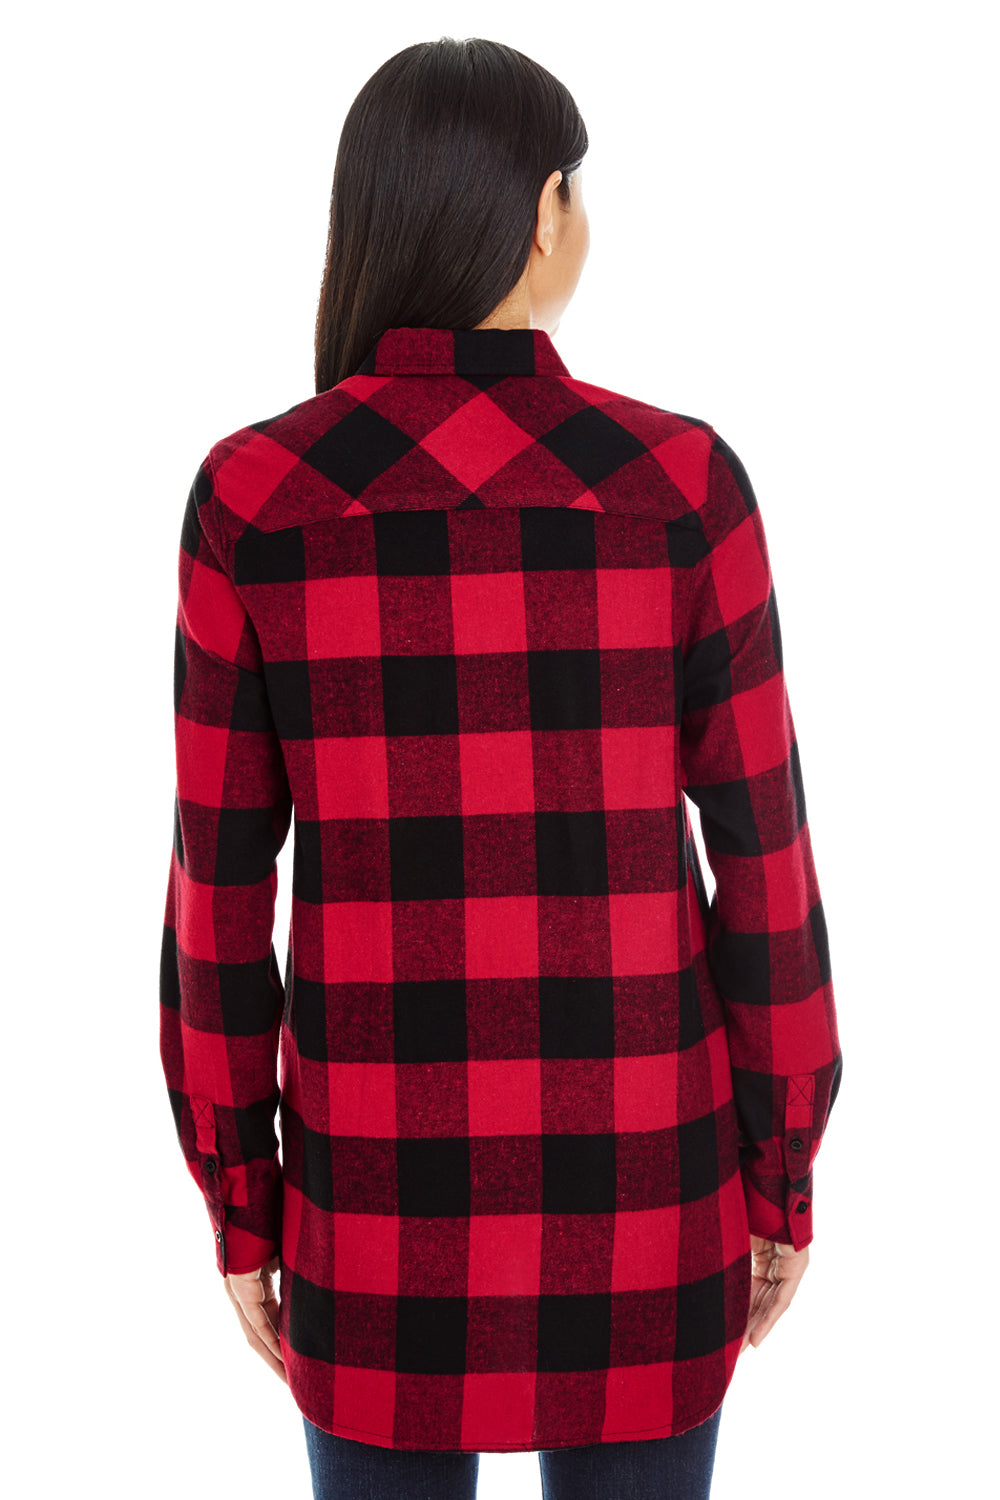 Burnside B5210/5210 Womens Boyfriend Flannel Long Sleeve Button Down Shirt w/ Double Pockets Red/Black Model Back